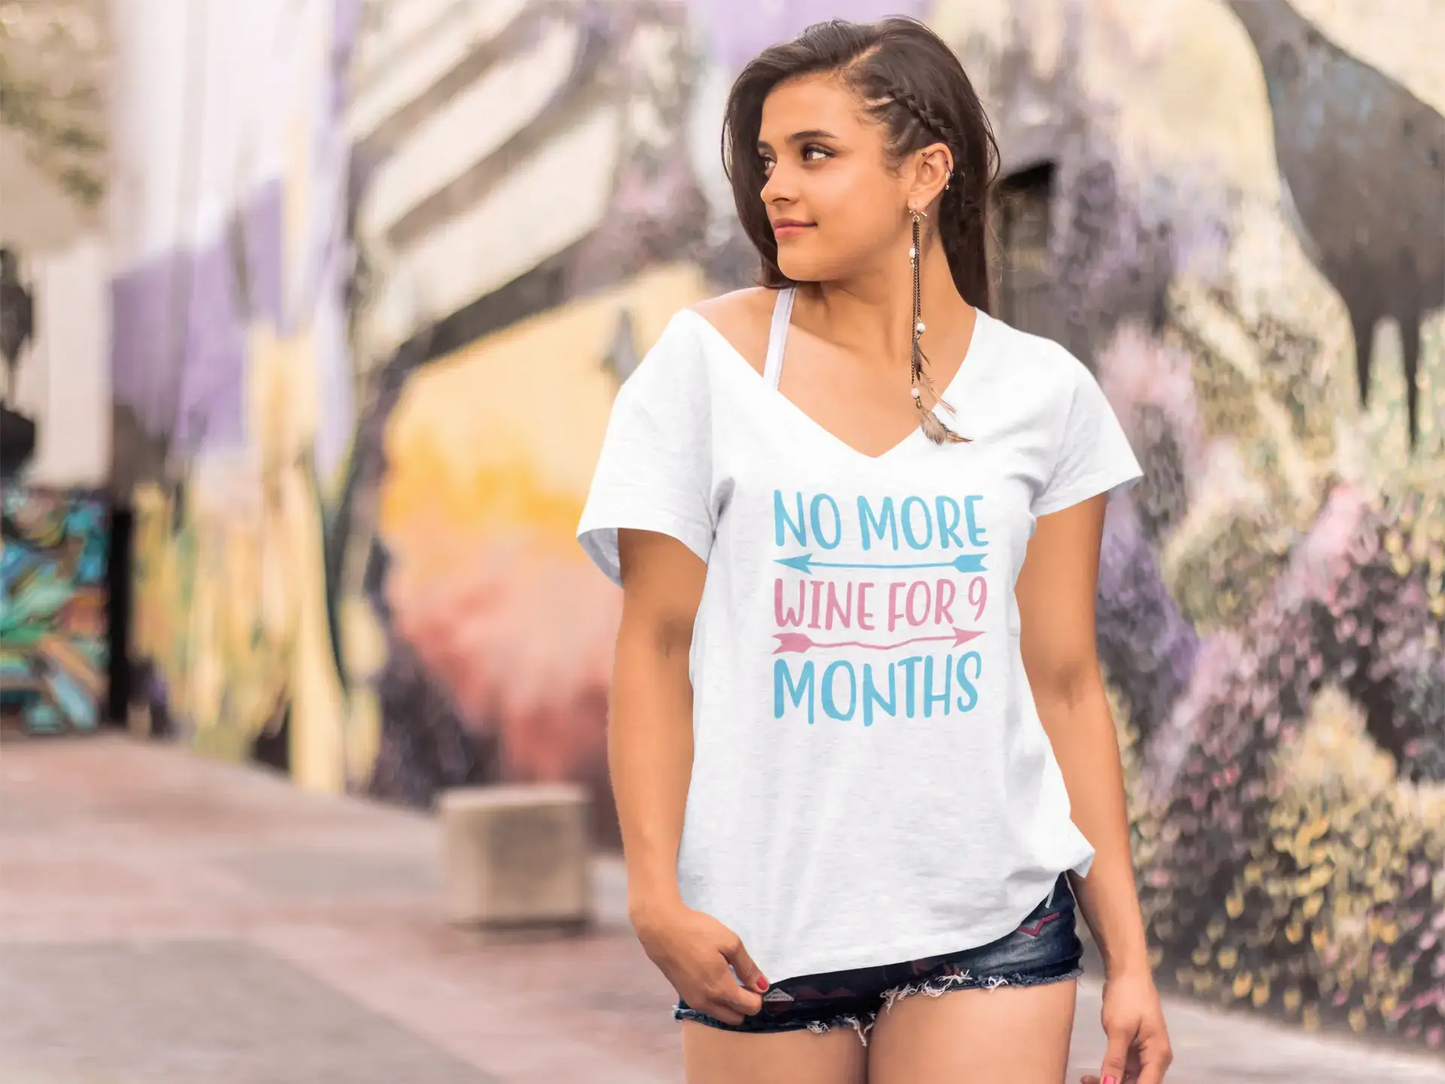 ULTRABASIC Women's V-Neck T-Shirt No More Wine for 9 Months - Funny Short Sleeve Tee Shirt Tops